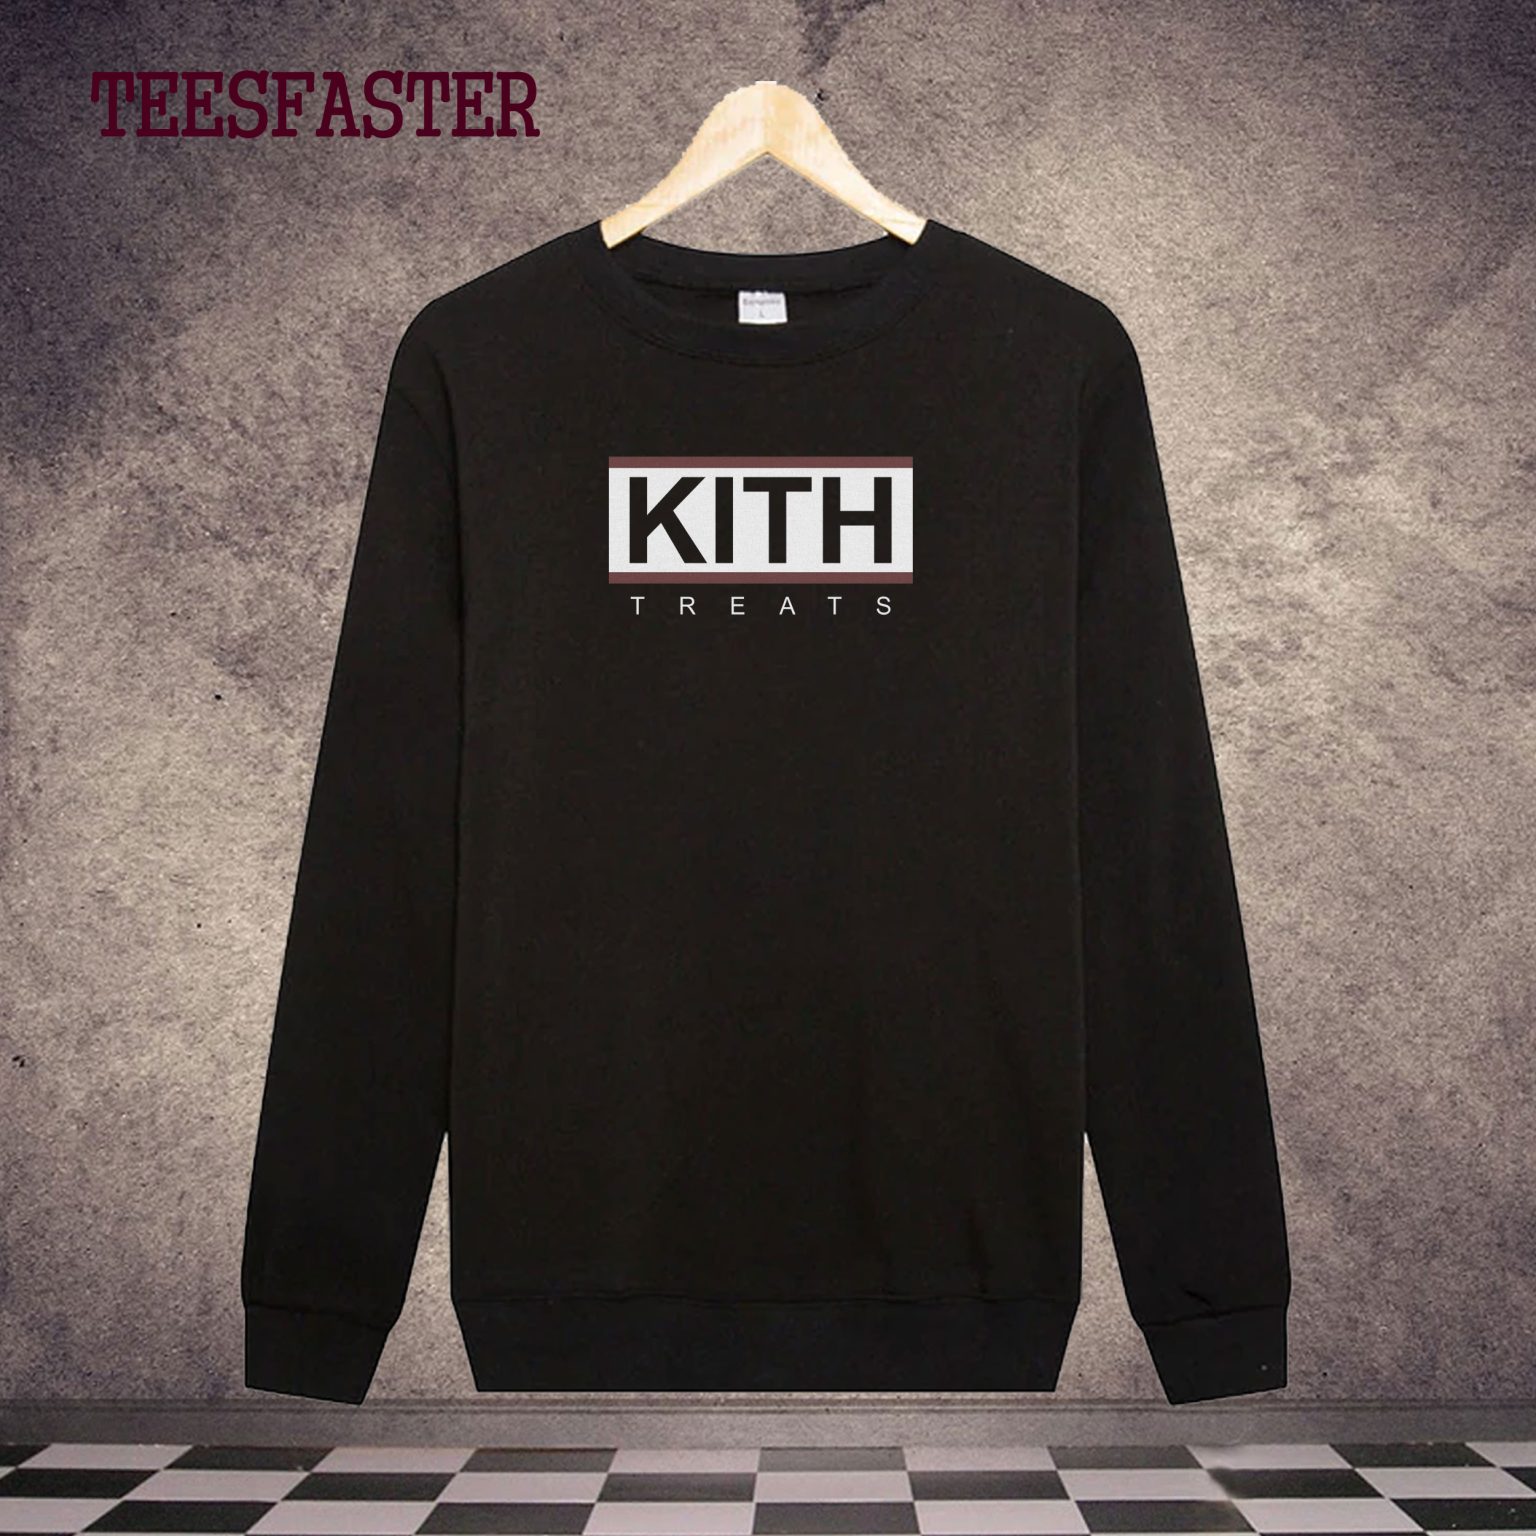 Kith Treats Sweatshirt